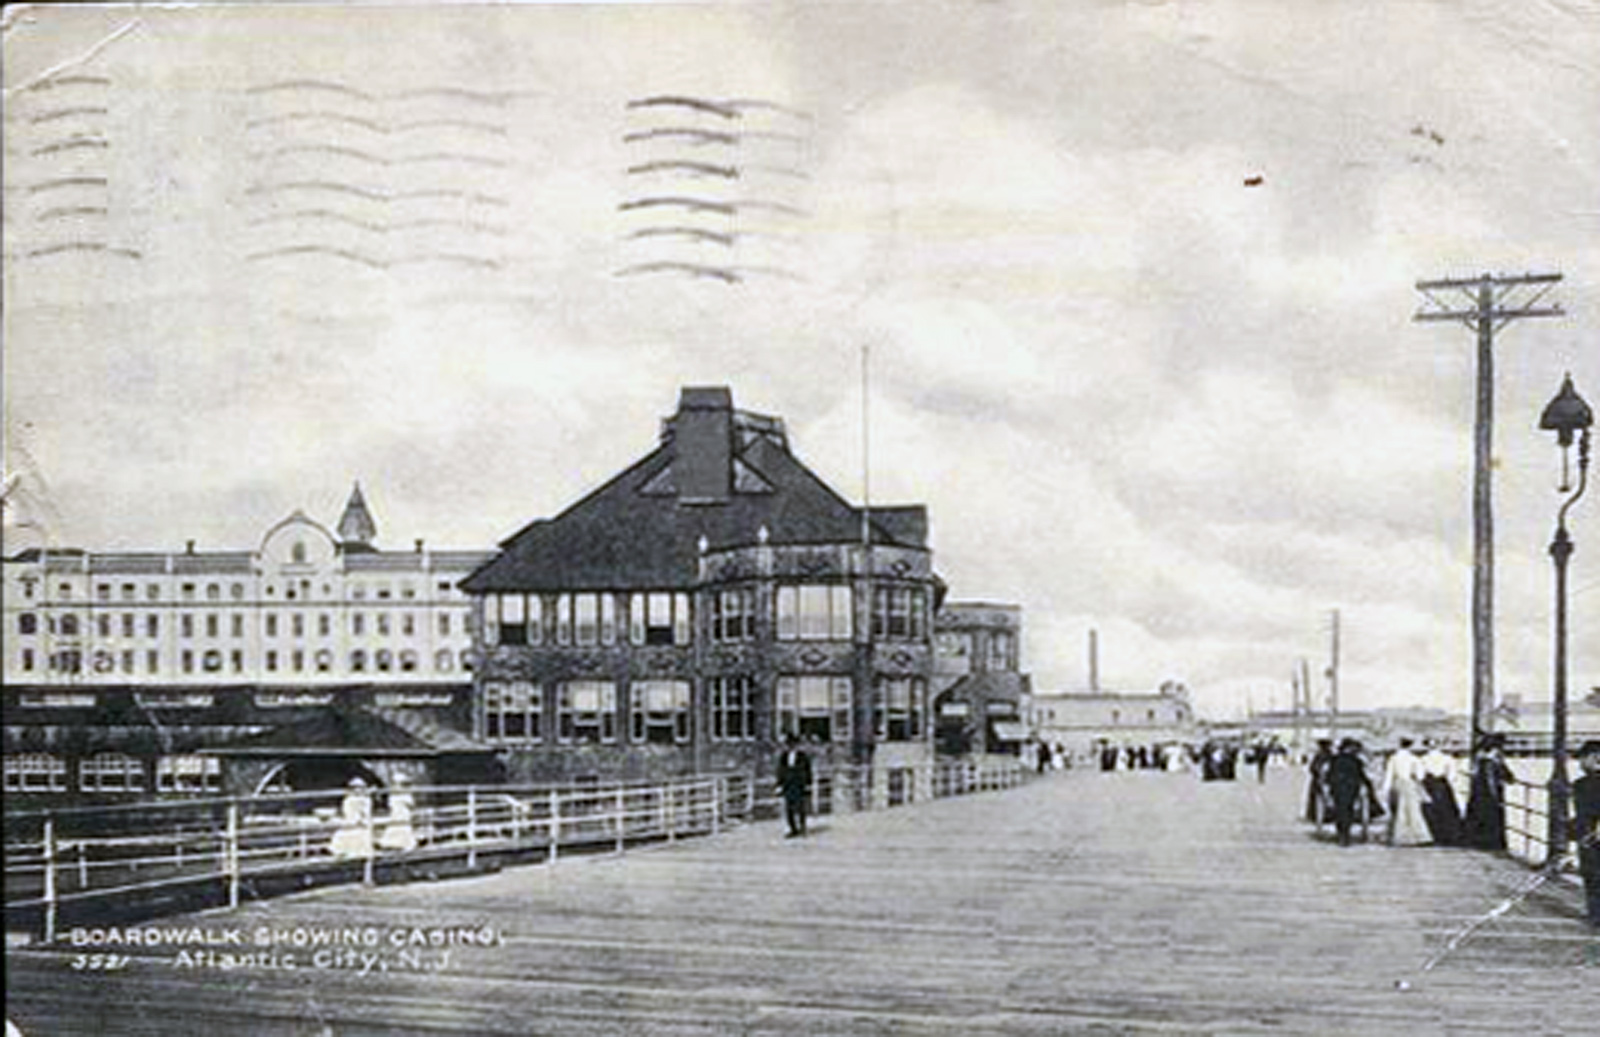 Atlantic City - Boardwalk And Brighton Casino - c 1910